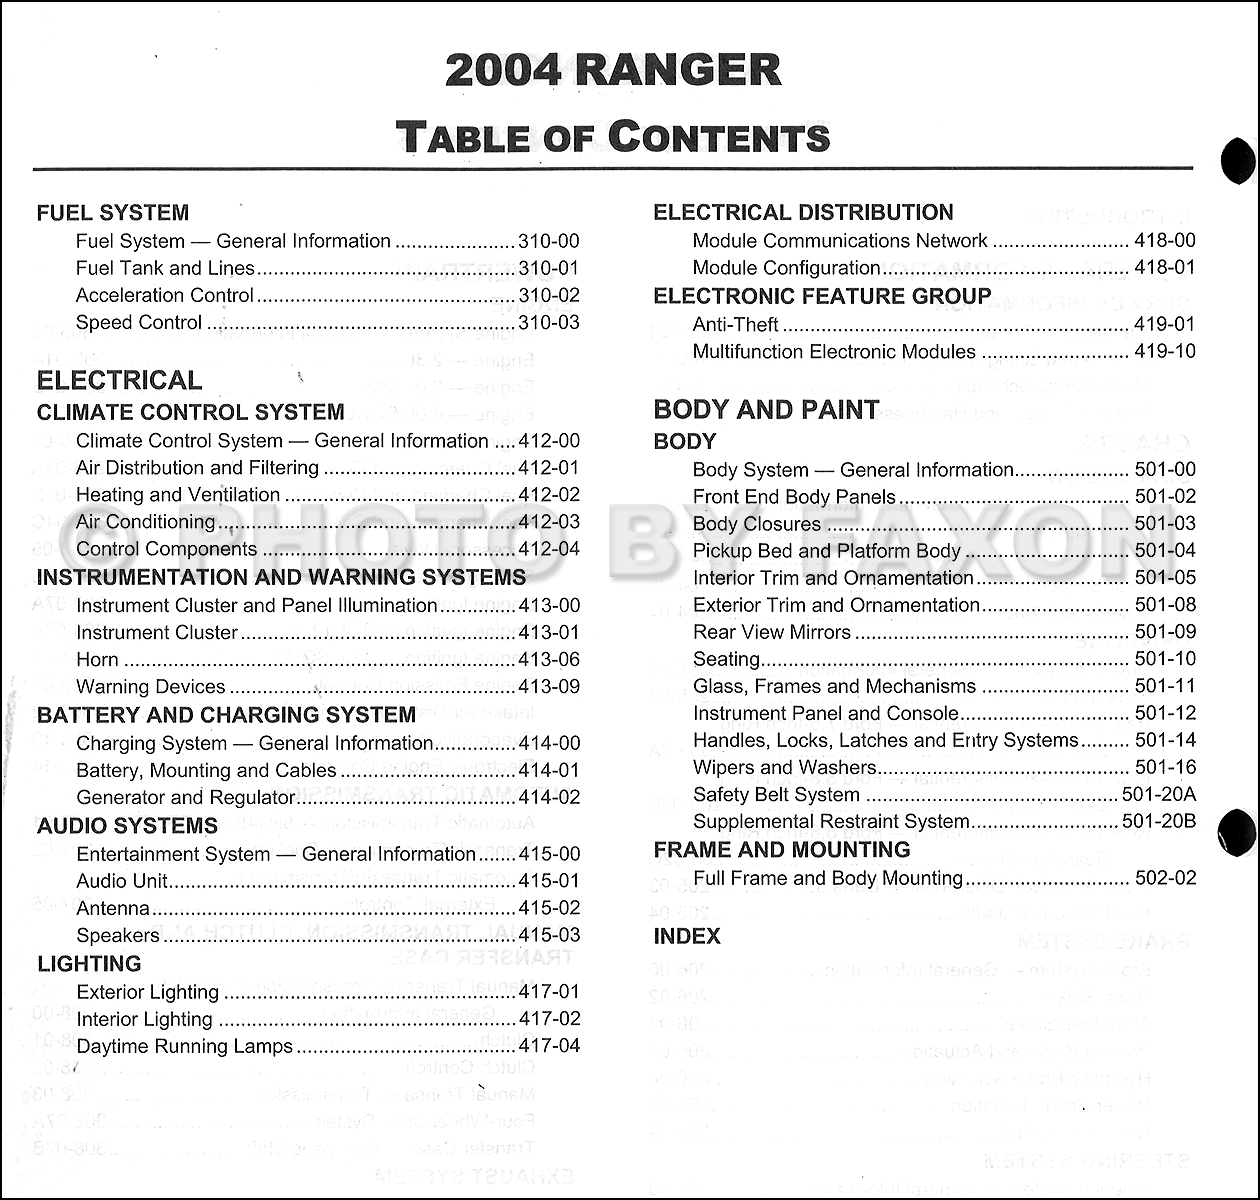 2004 Ford ranger service manual #3